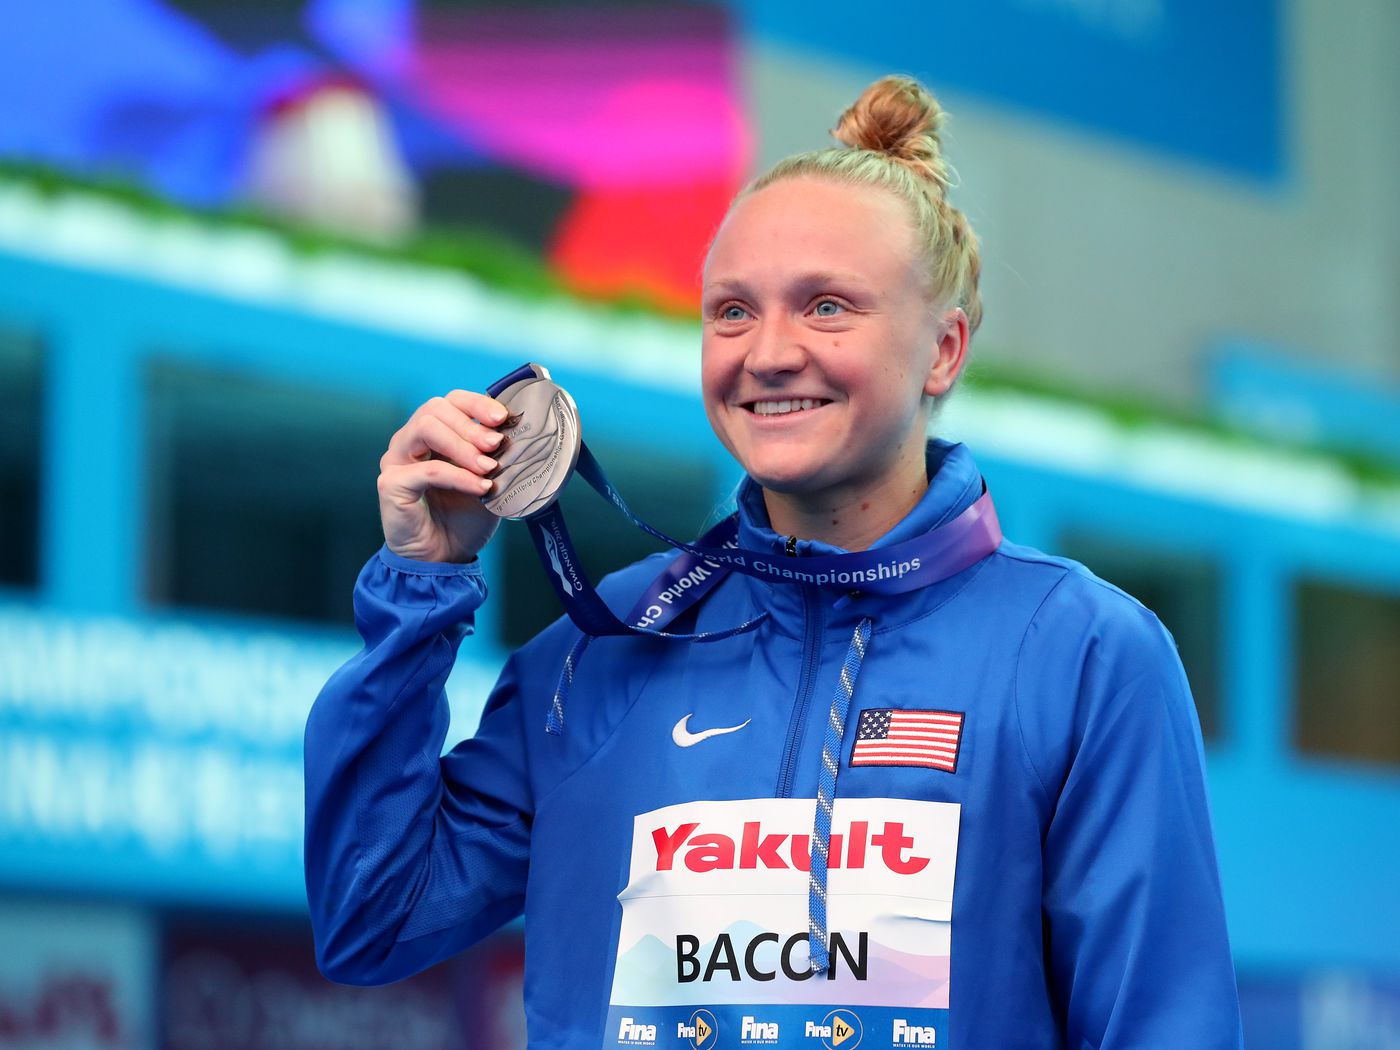 Minnesota Senior Sarah Bacon Wins Silver At World Diving